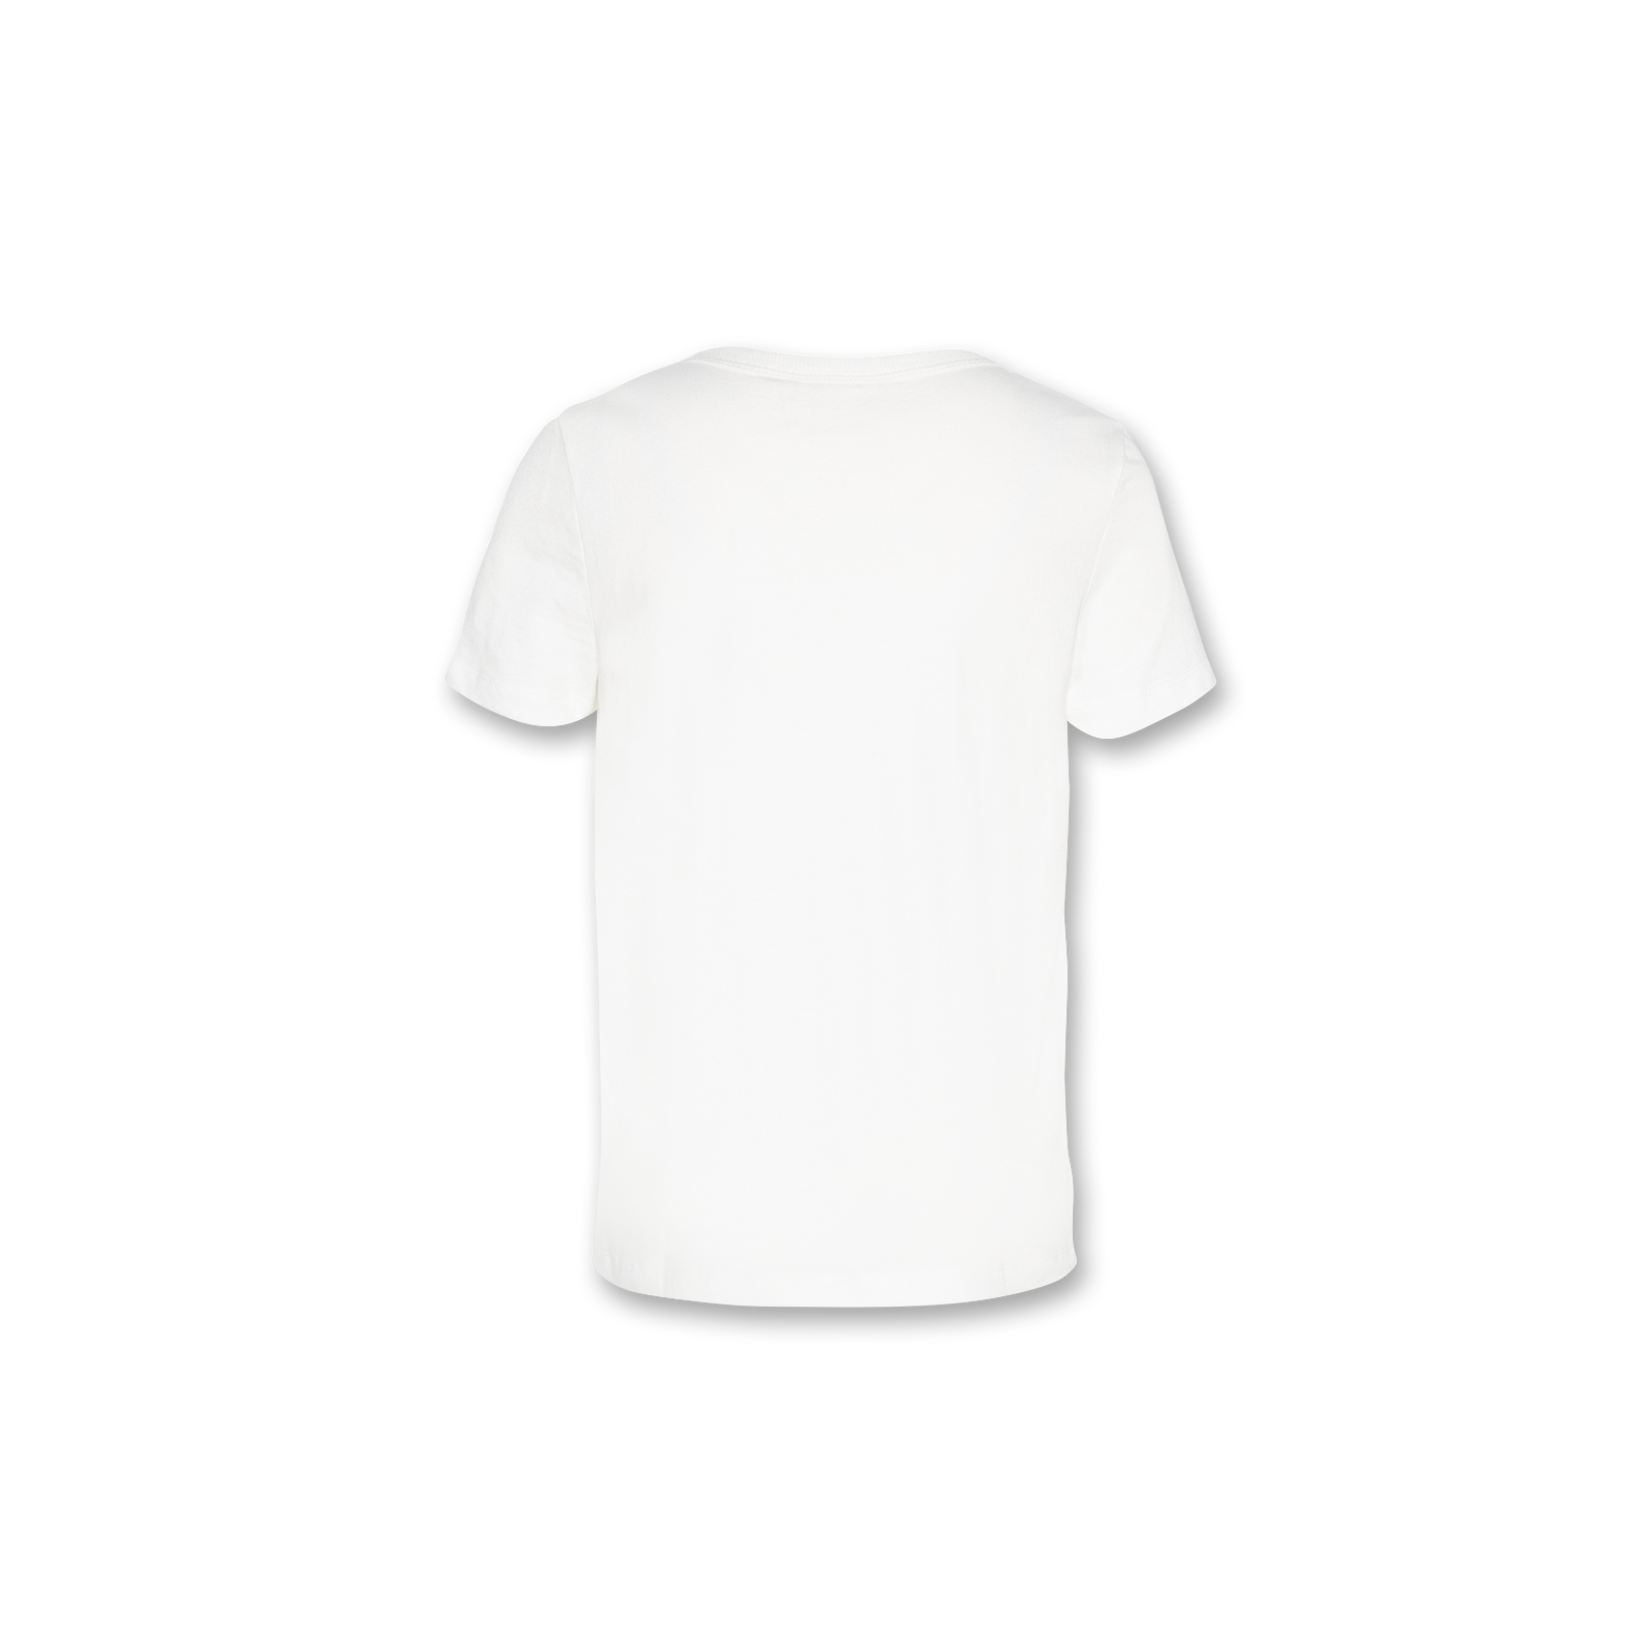 AO76 AO76 T-shirt s/s logo AO76 offwhite